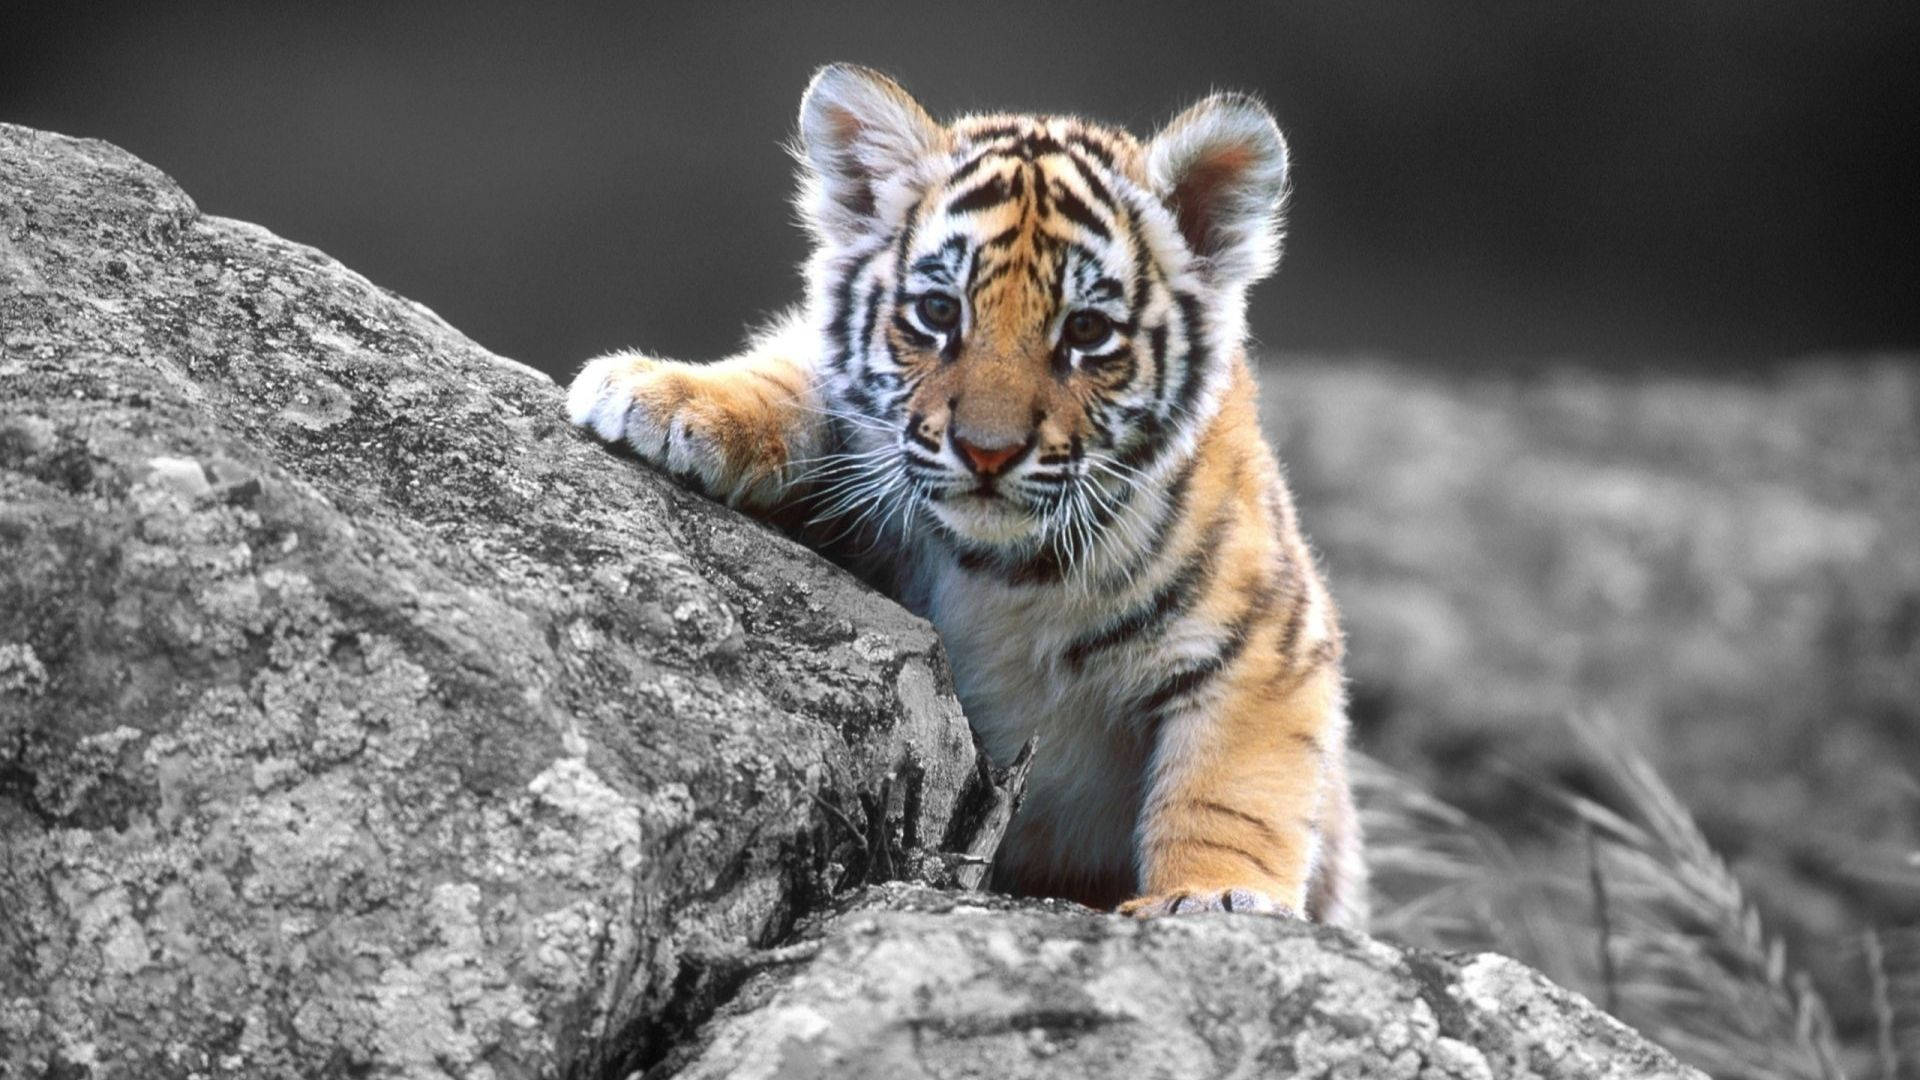 Baby Animal Tiger Behind Rocks Background